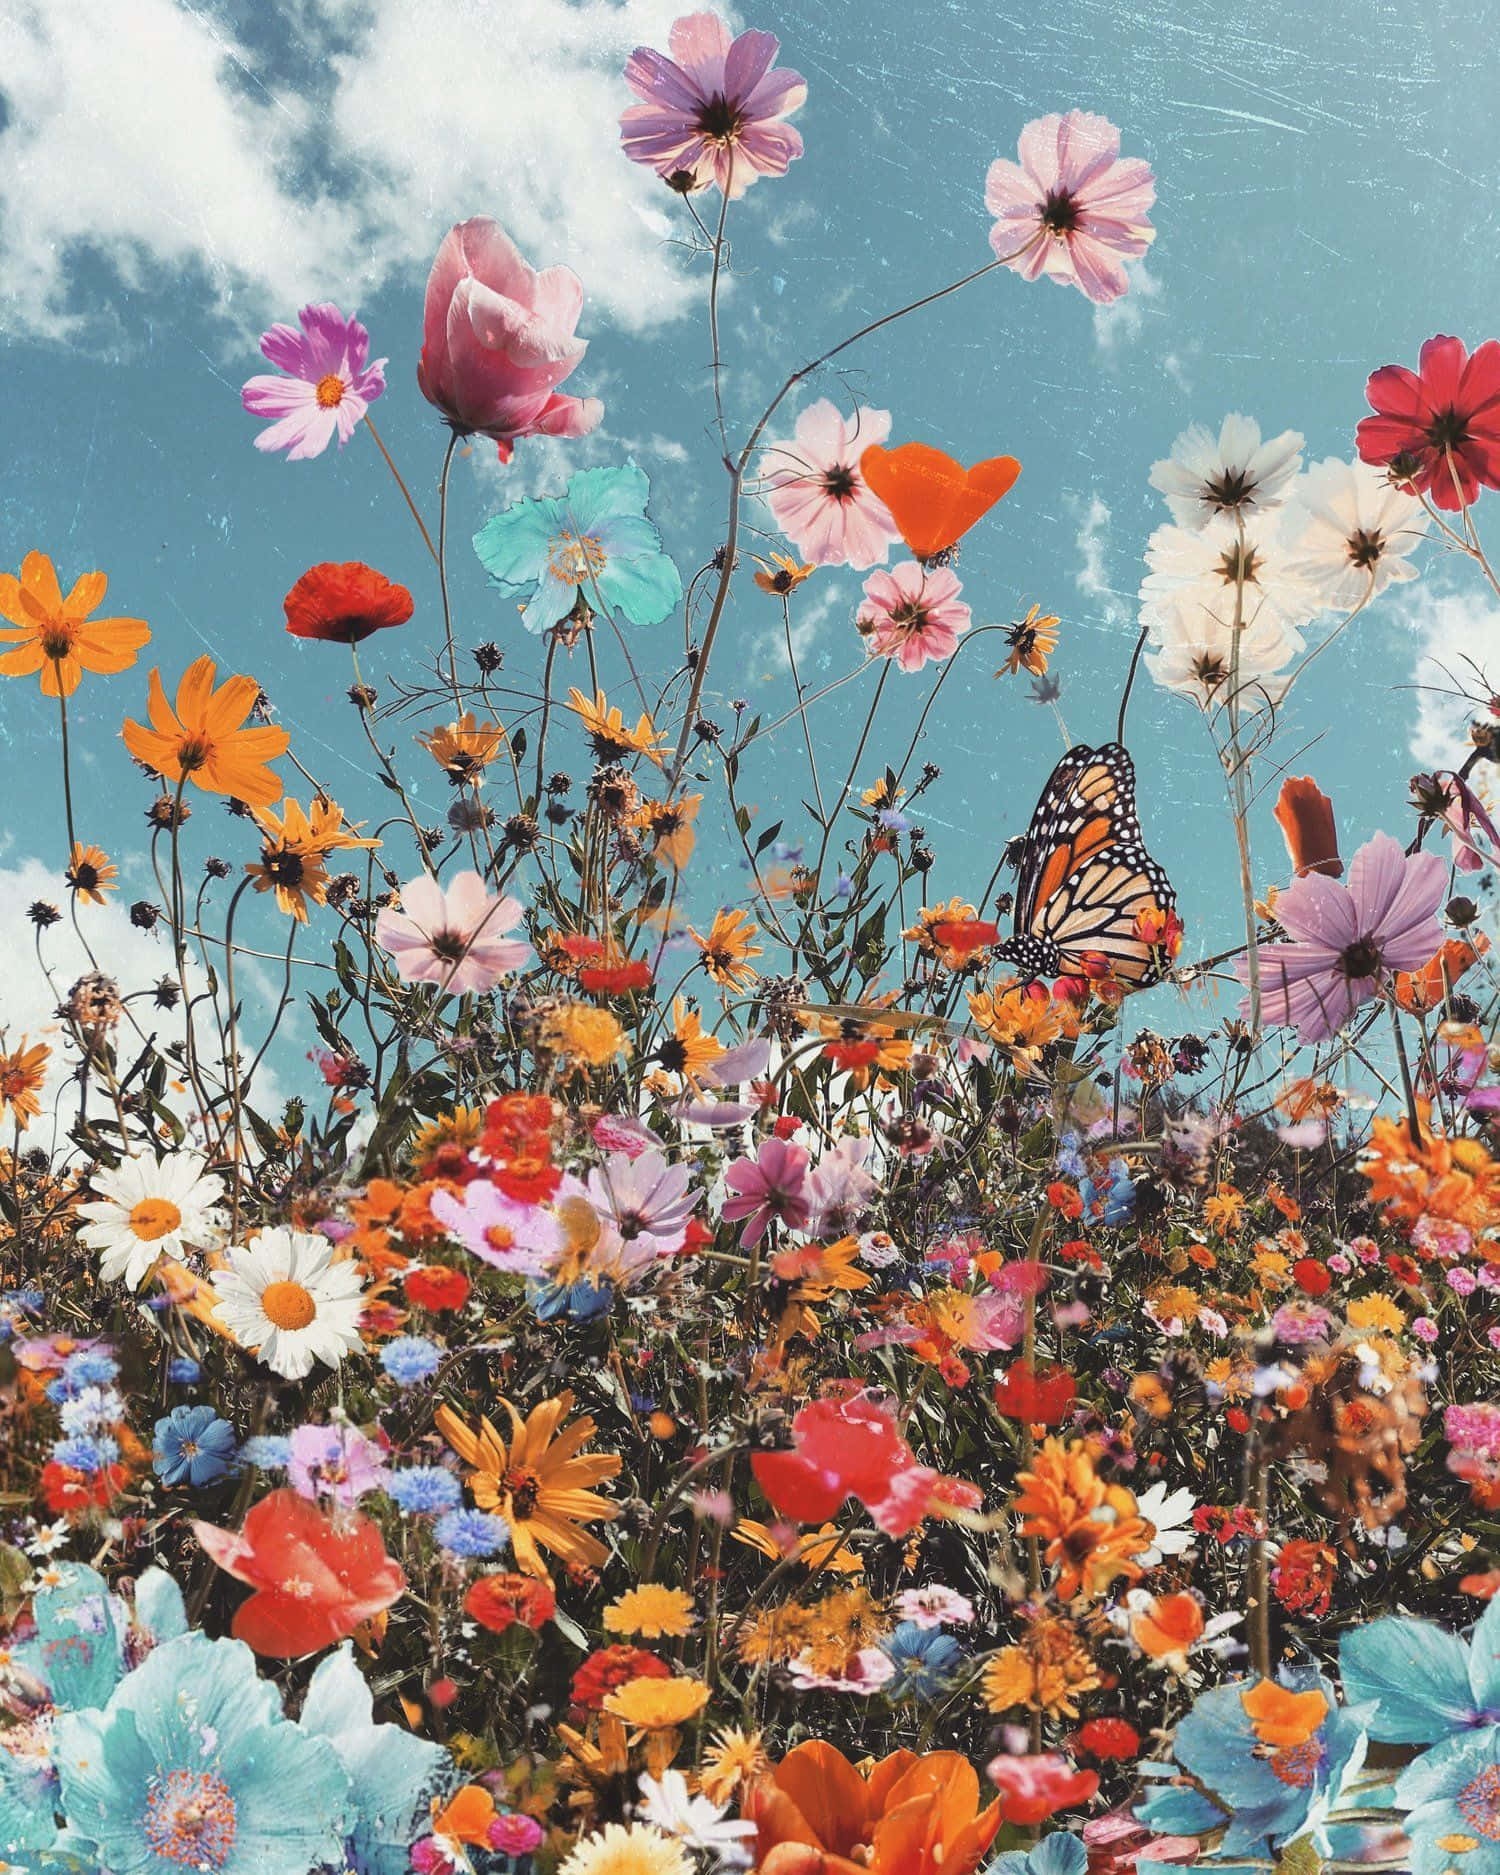 A Colorful Flower Field With Butterflies And Butterflies Wallpaper